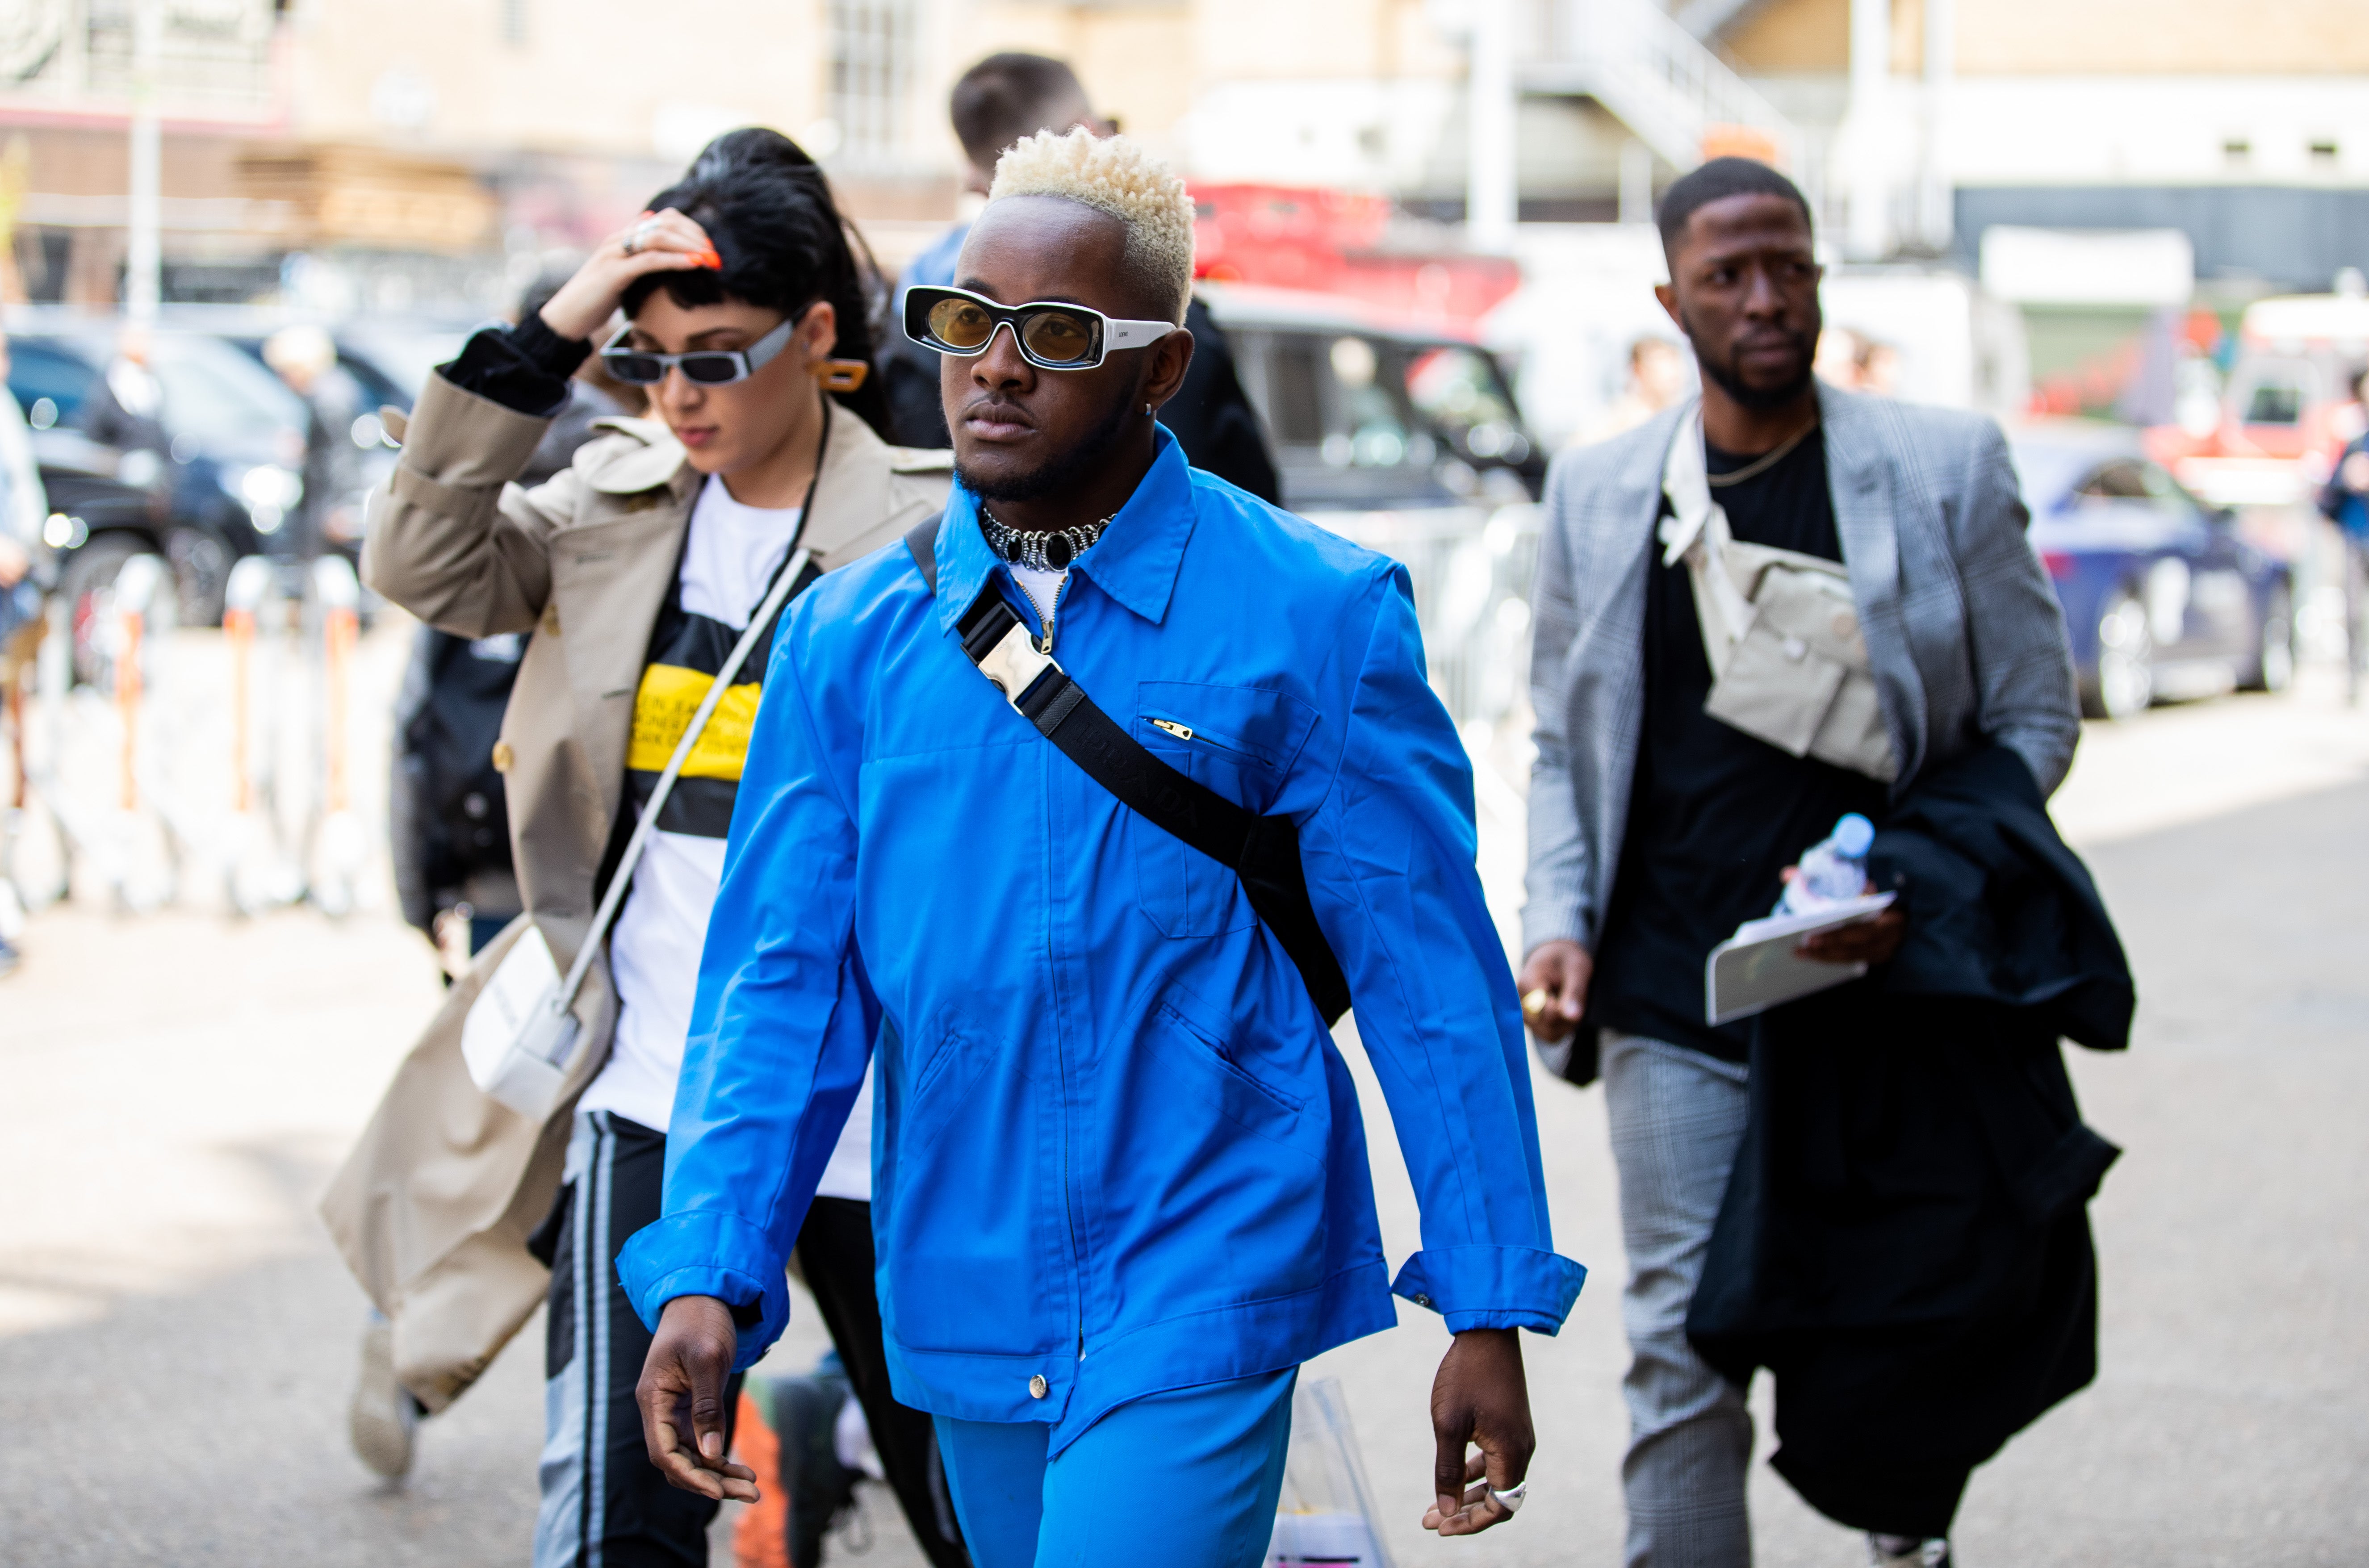 The Best Street Style from London Men’s Fashion Week